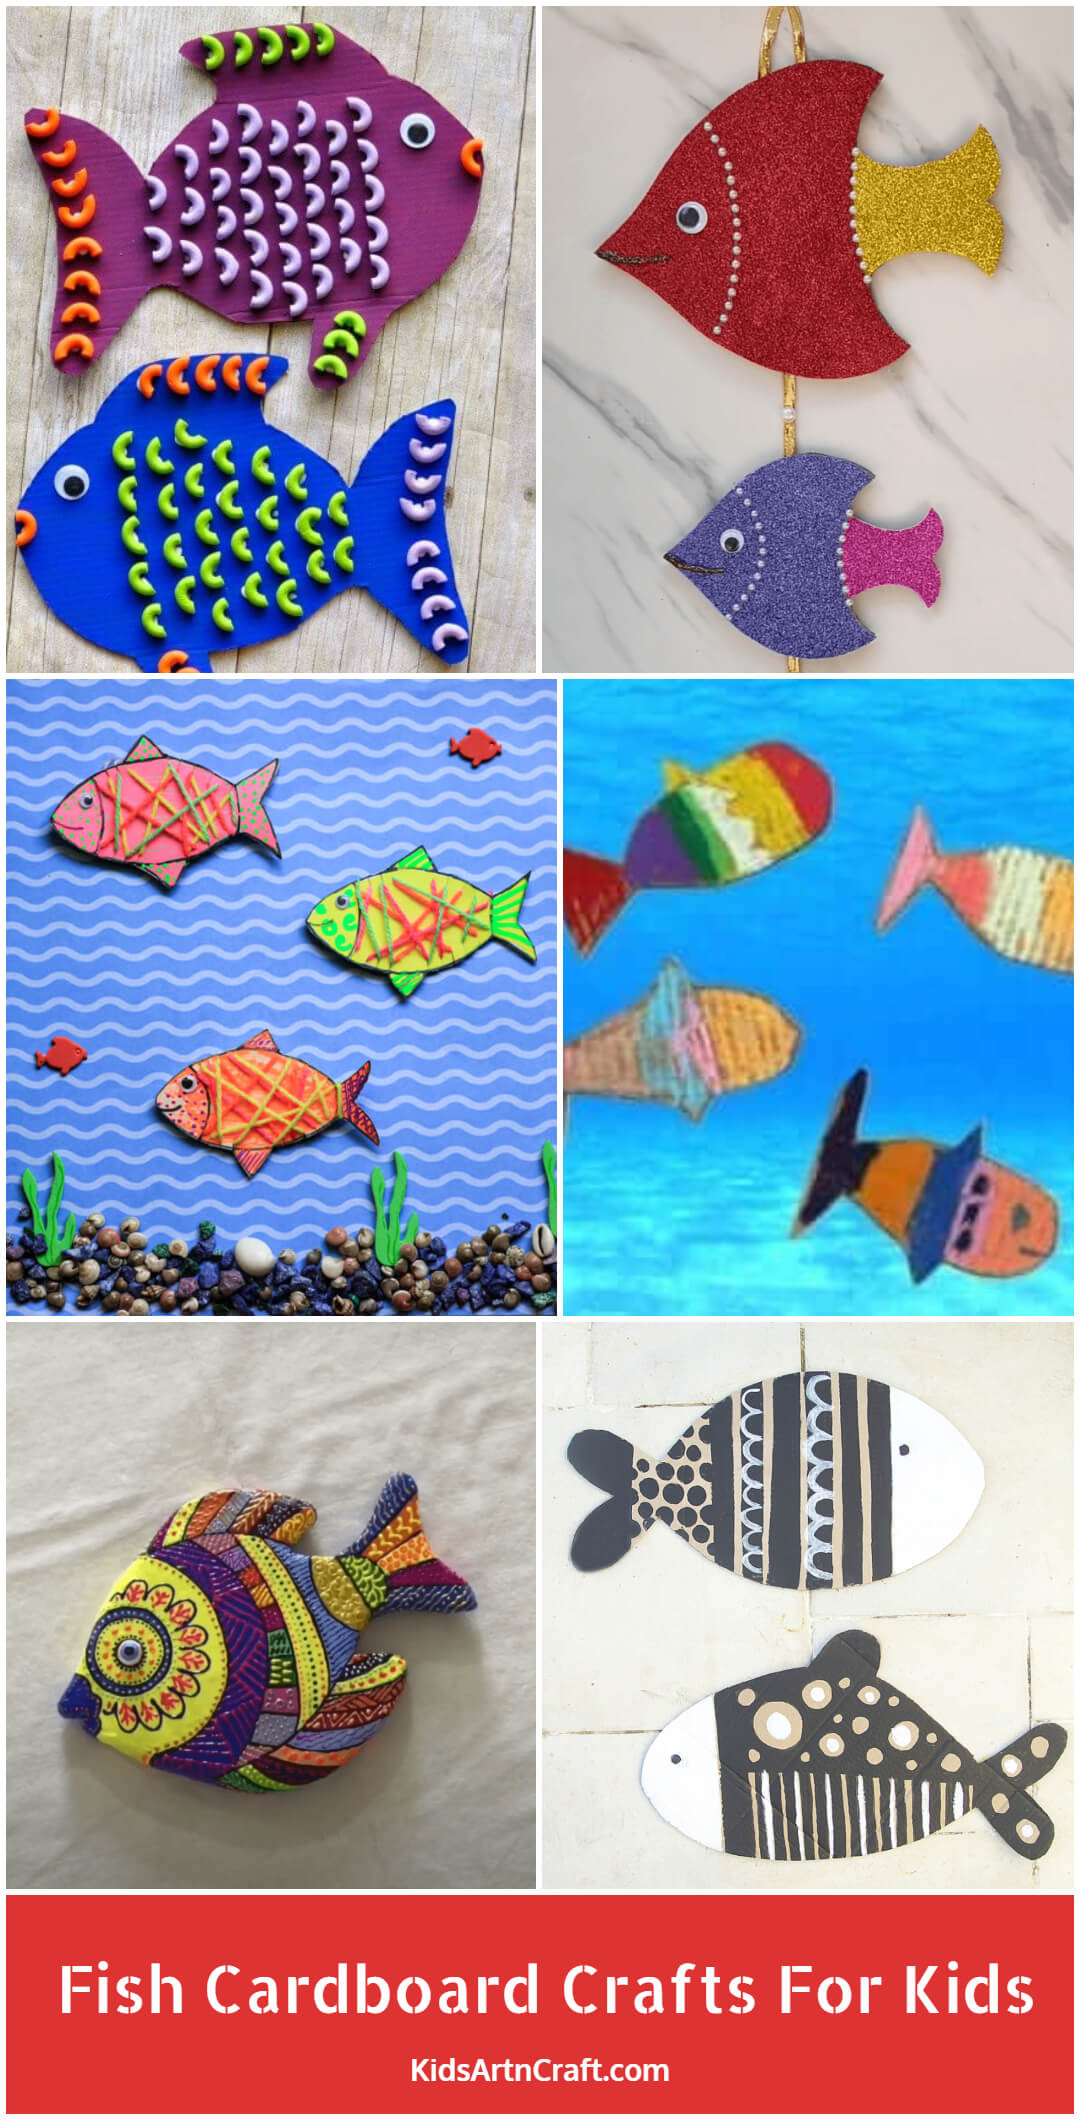 Fish Cardboard Crafts For Kids